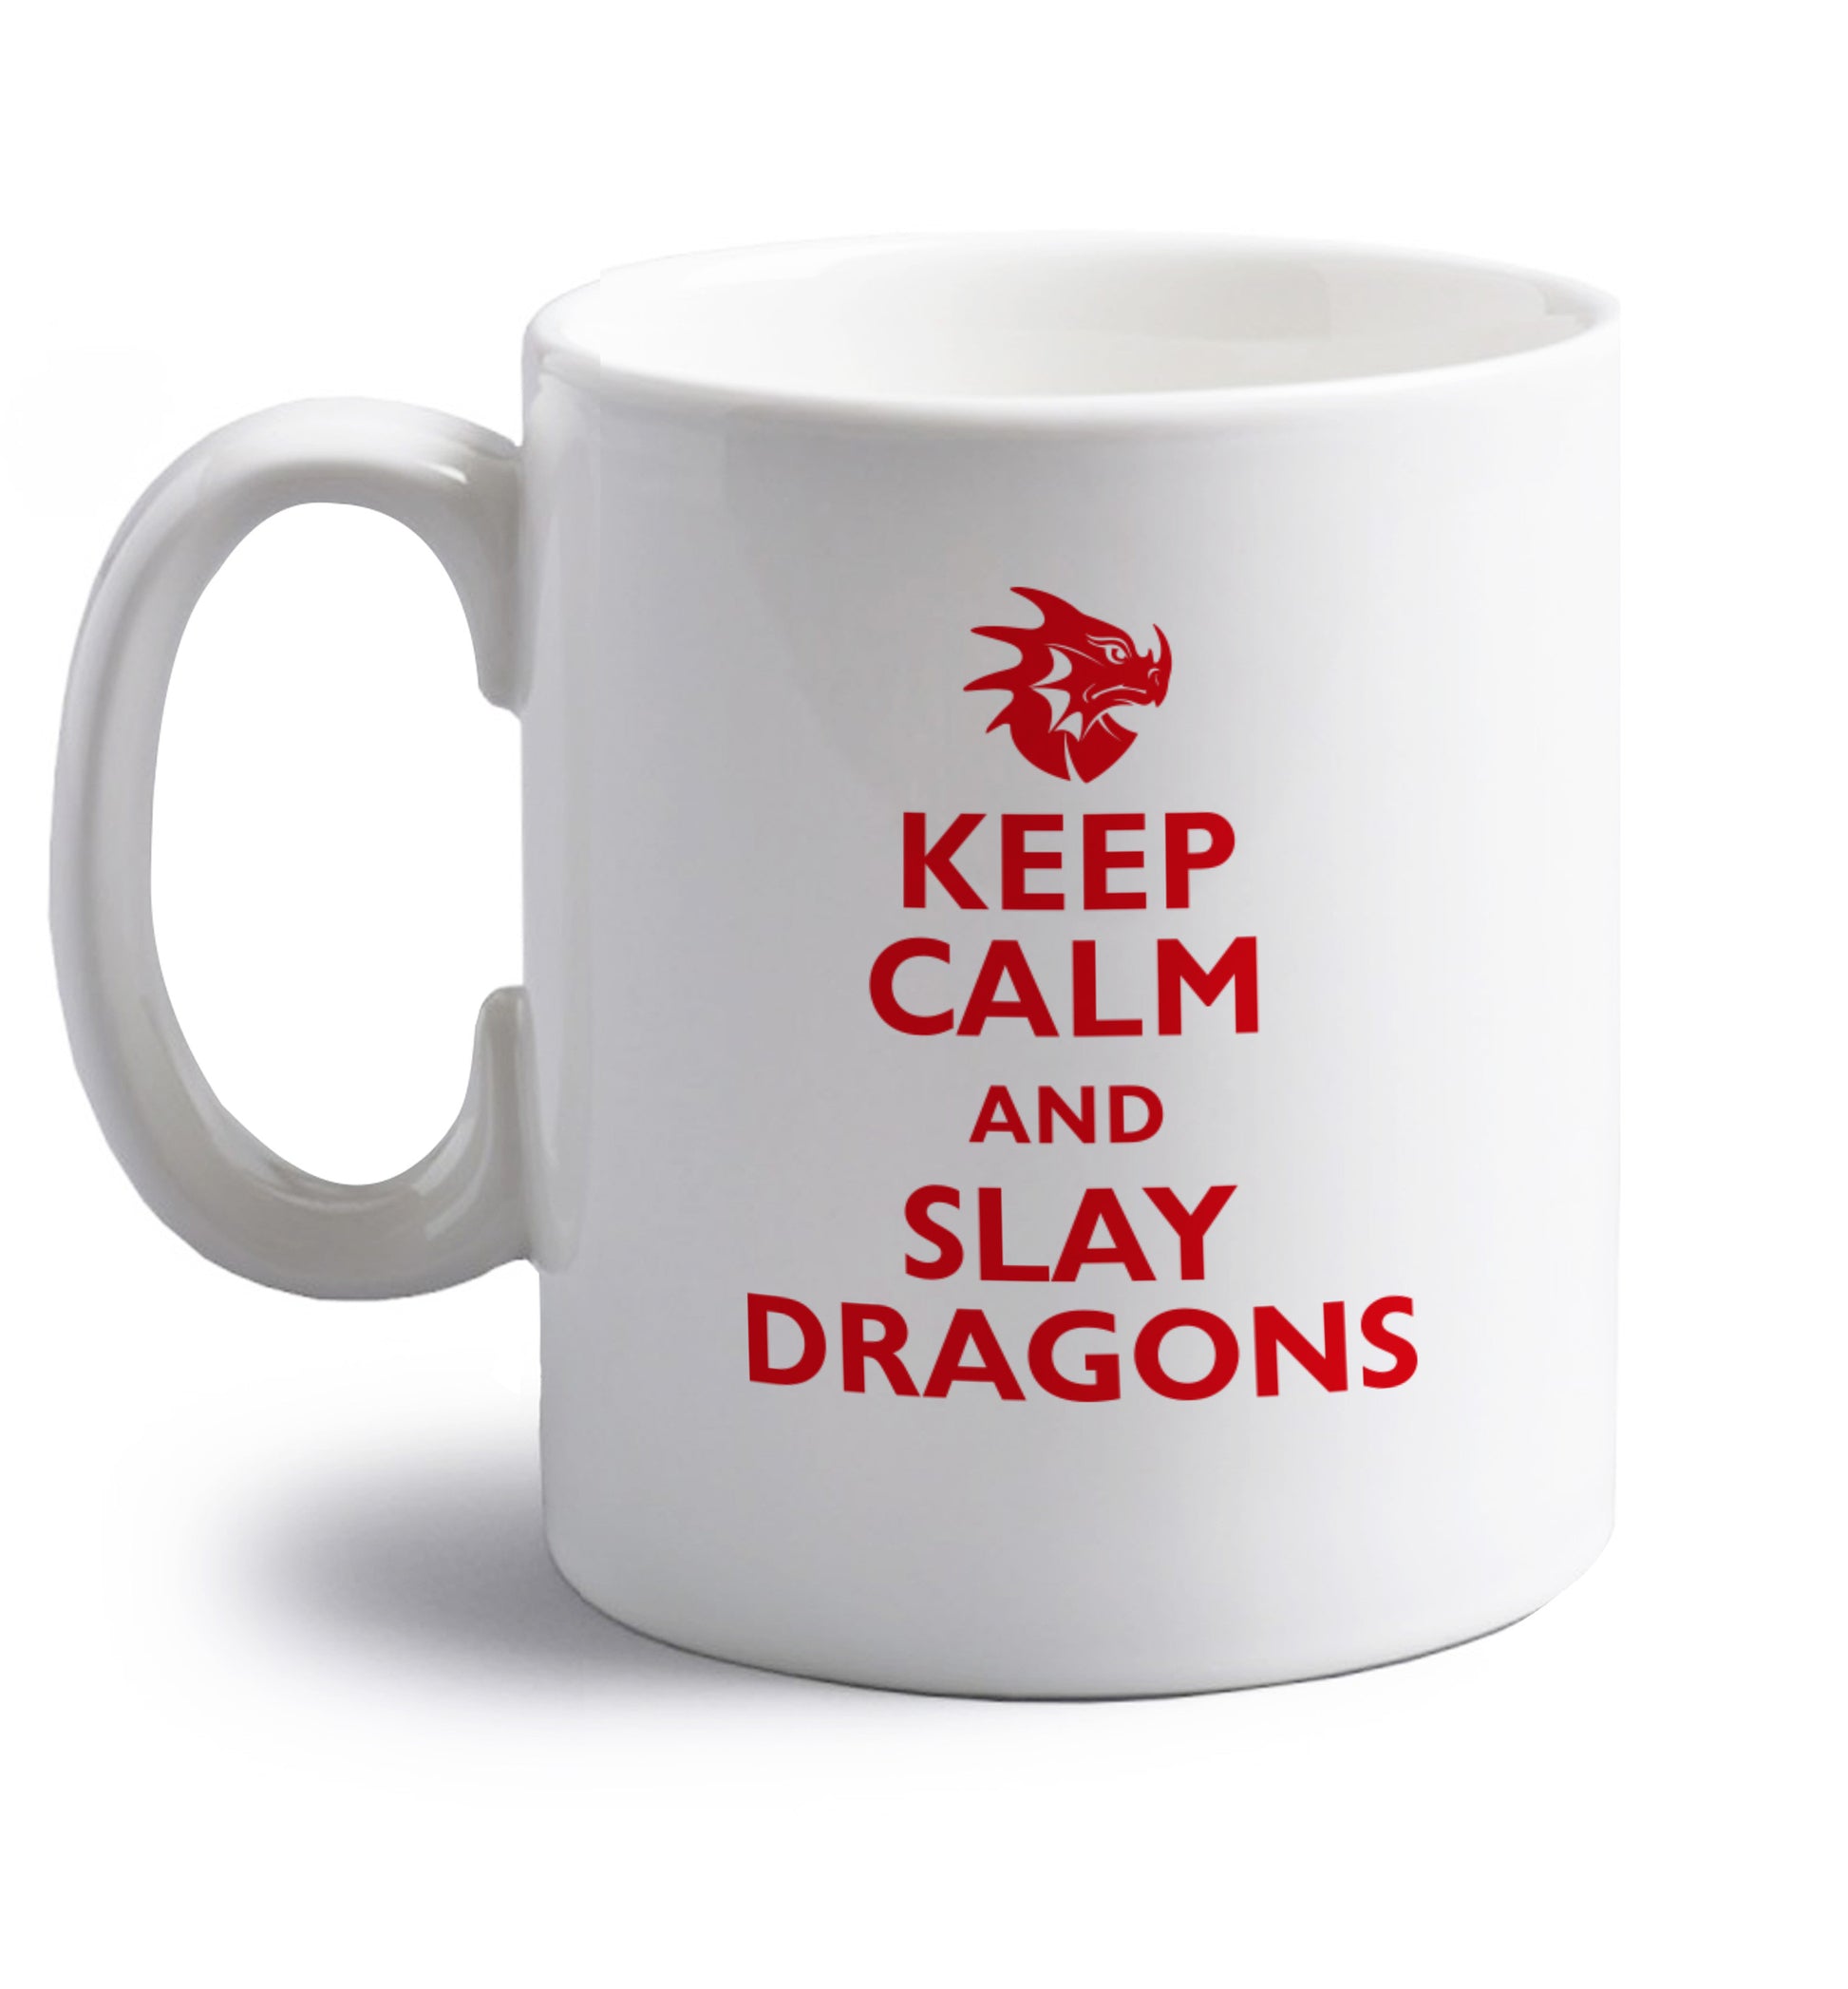 Keep calm and slay dragons right handed white ceramic mug 